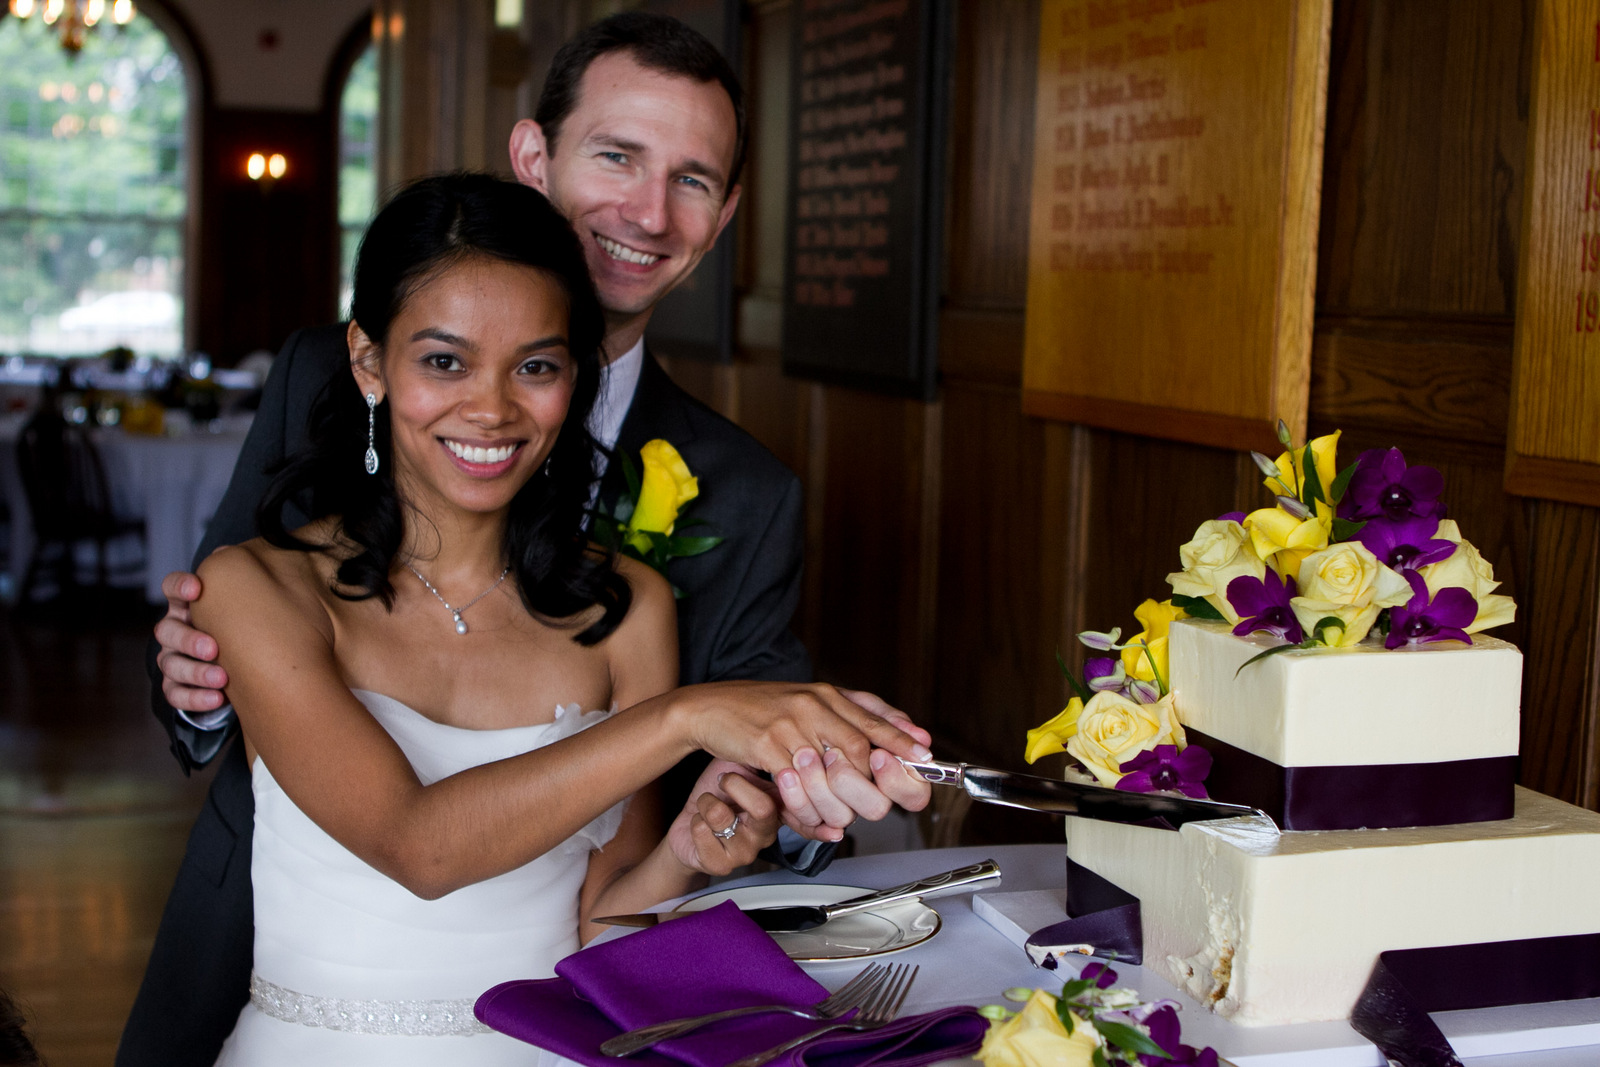 Judd-Rittler Wedding Reception - Photo by Brian Samuels Photography